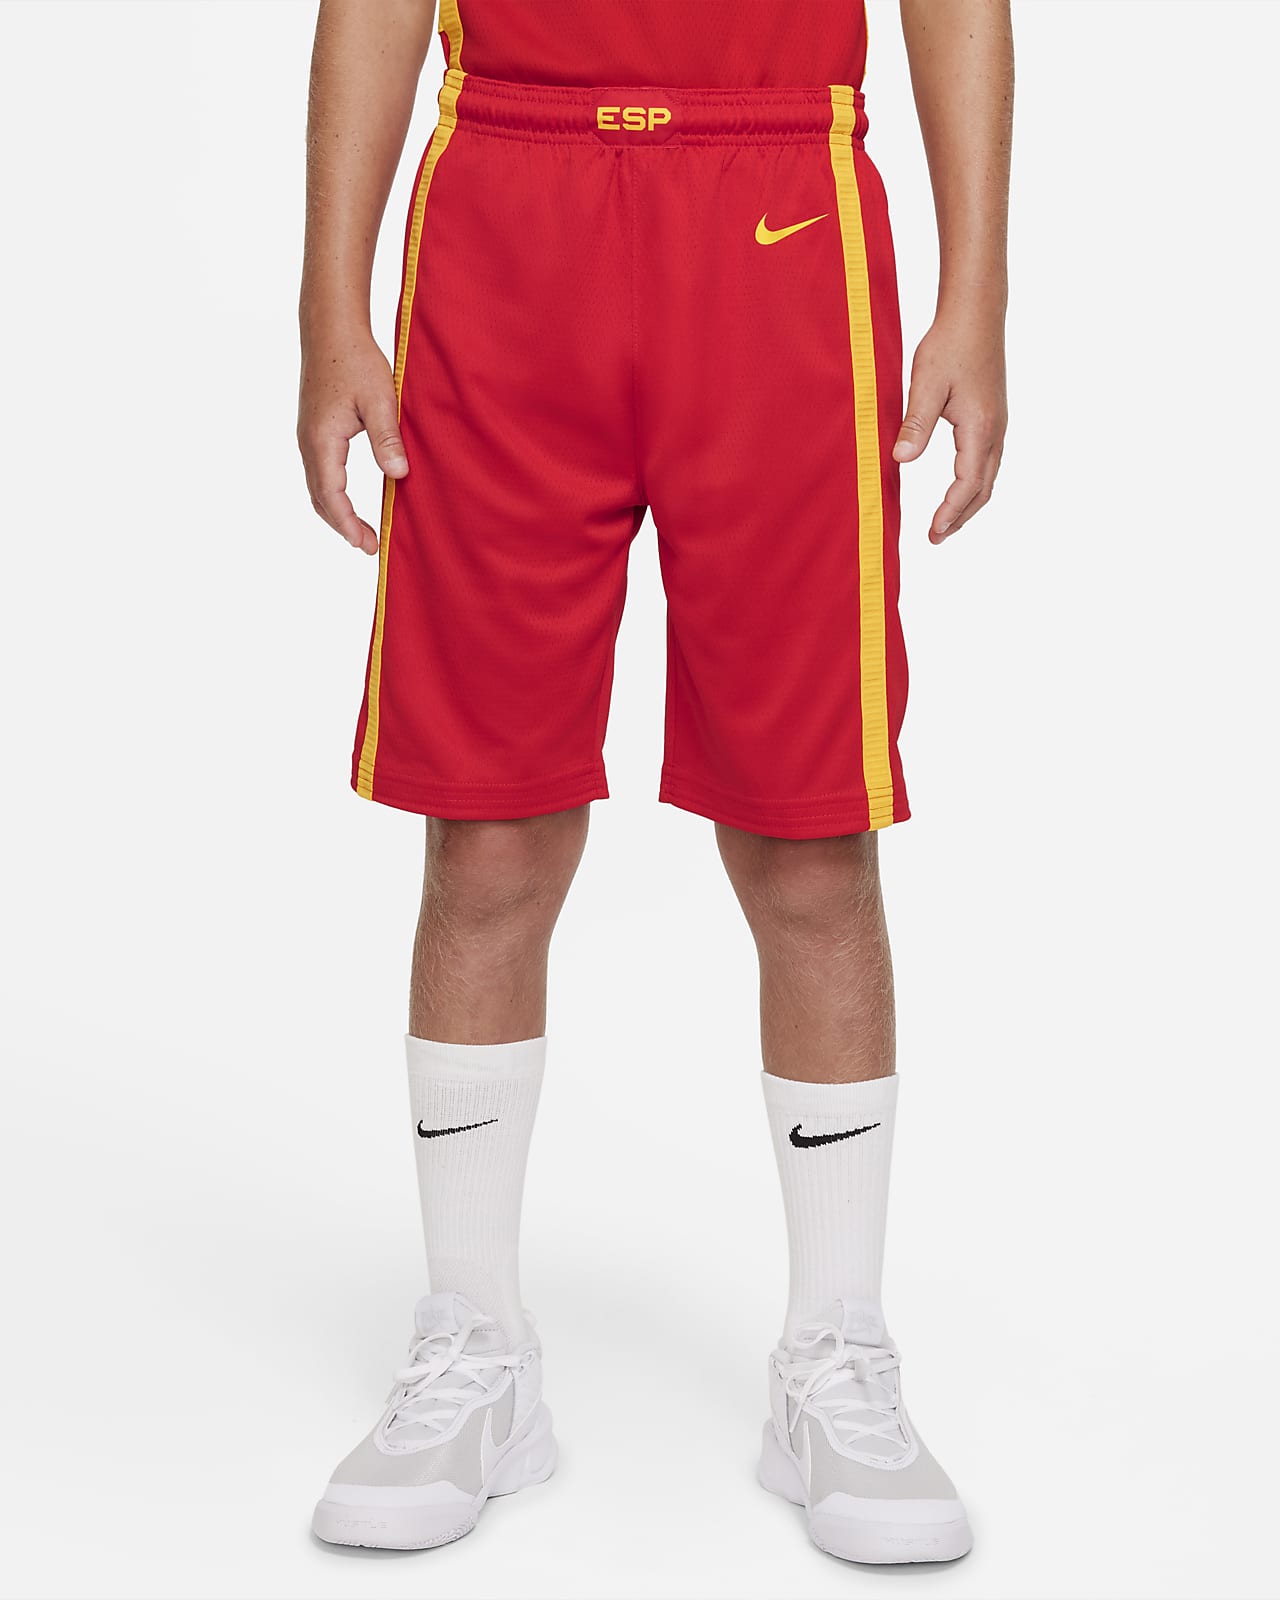 Spain (Road) Pantalons curts Nike de bàsquet - Nen/a